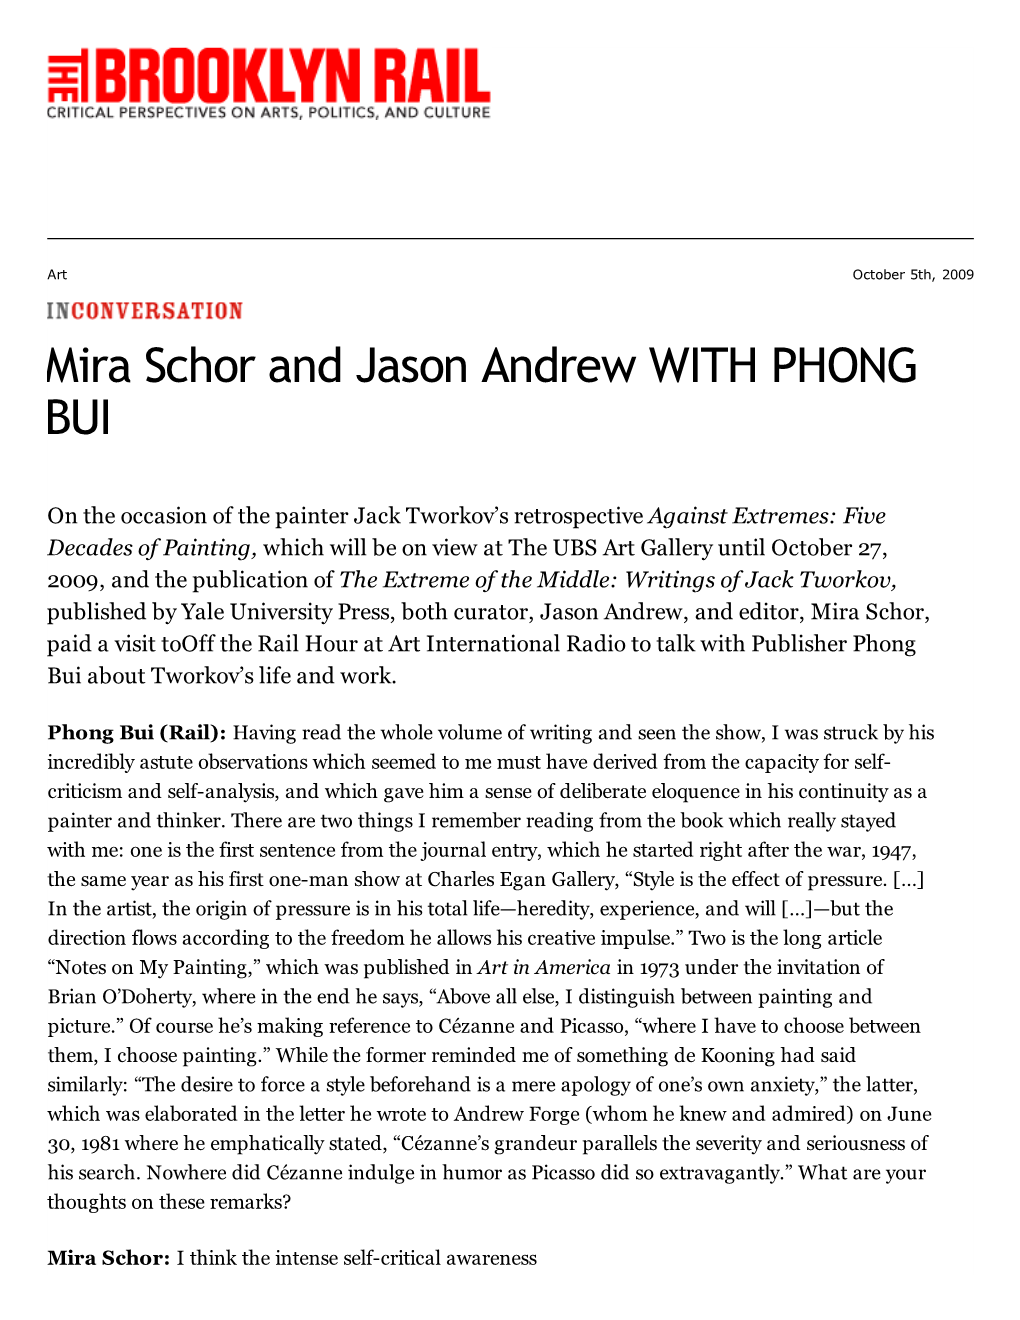 Mira Schor and Jason Andrew with PHONG BUI